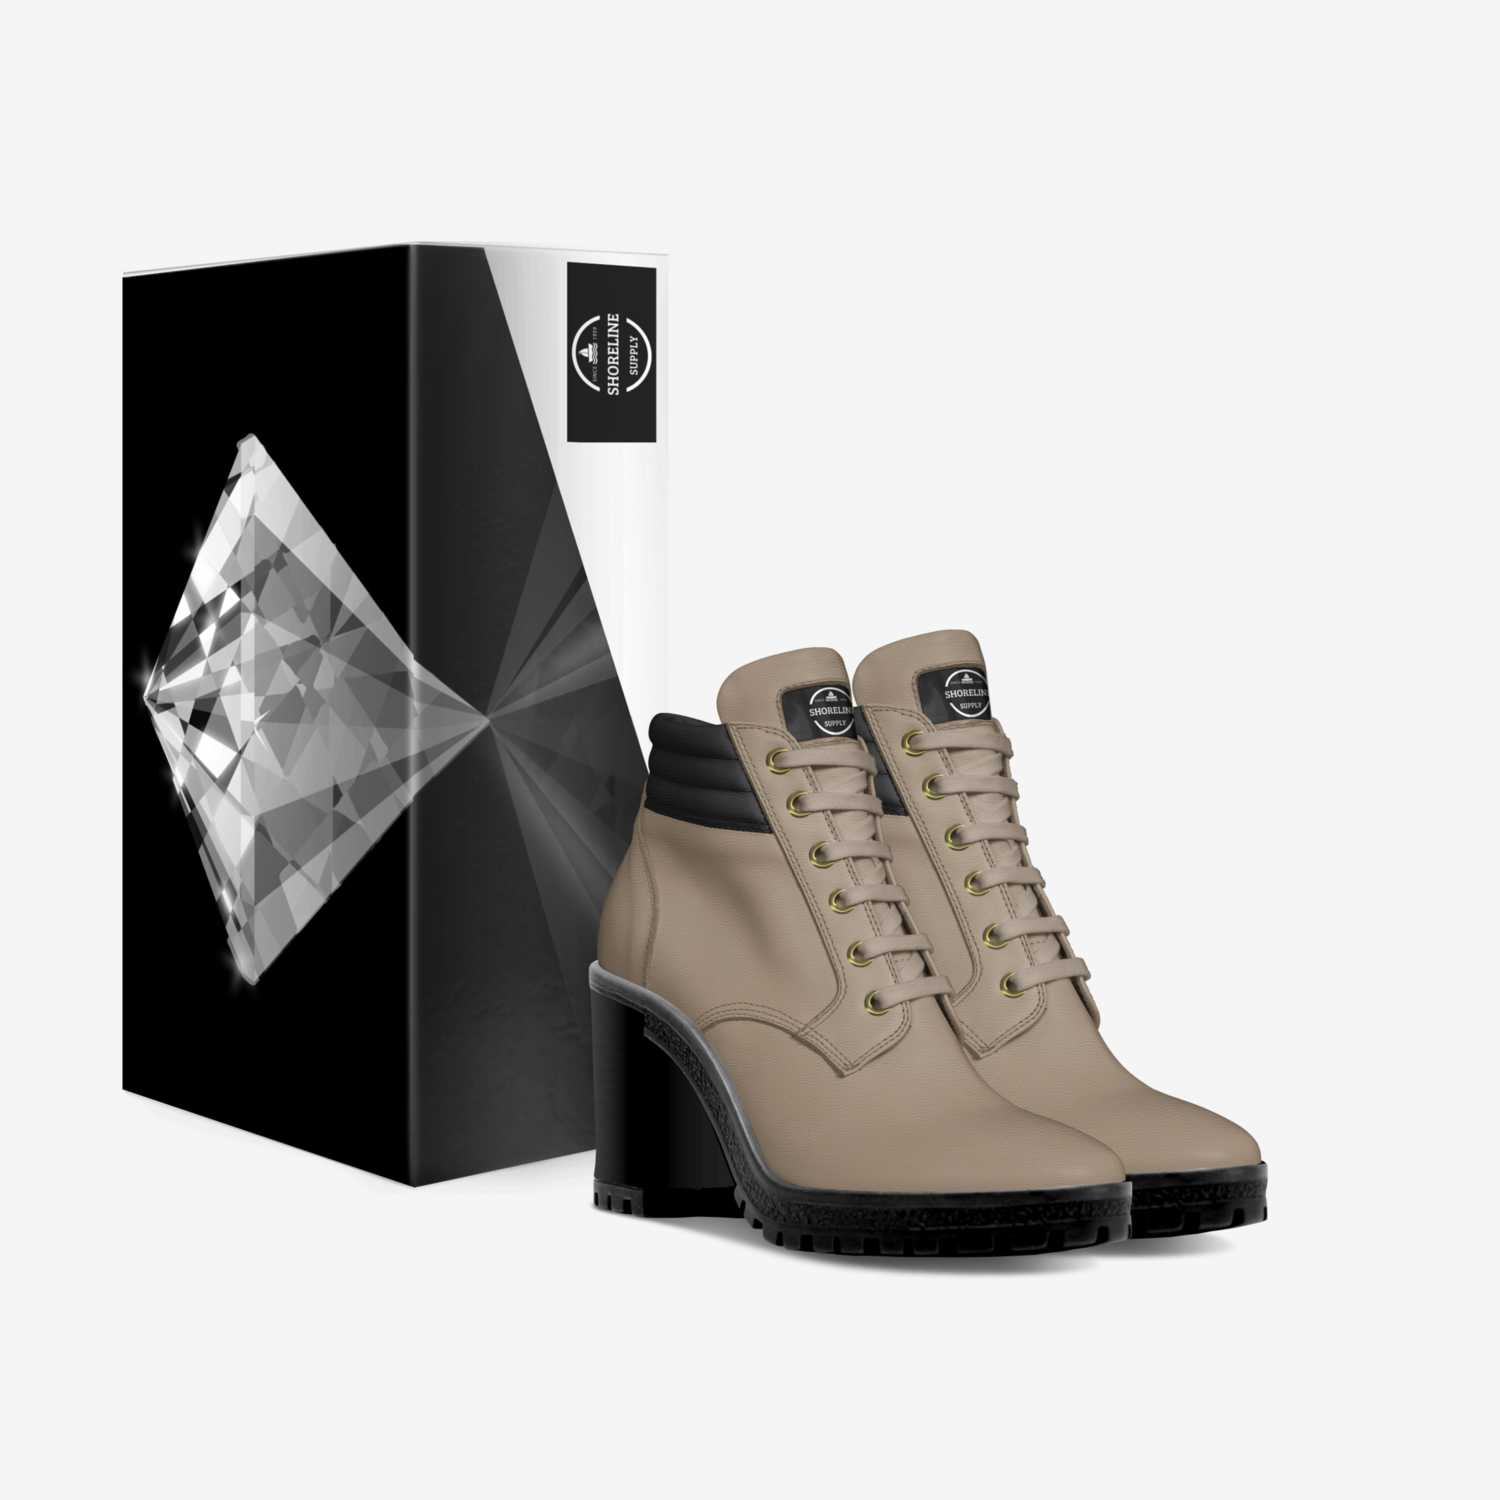 Shoreline custom made in Italy shoes by Tela Jones | Box view